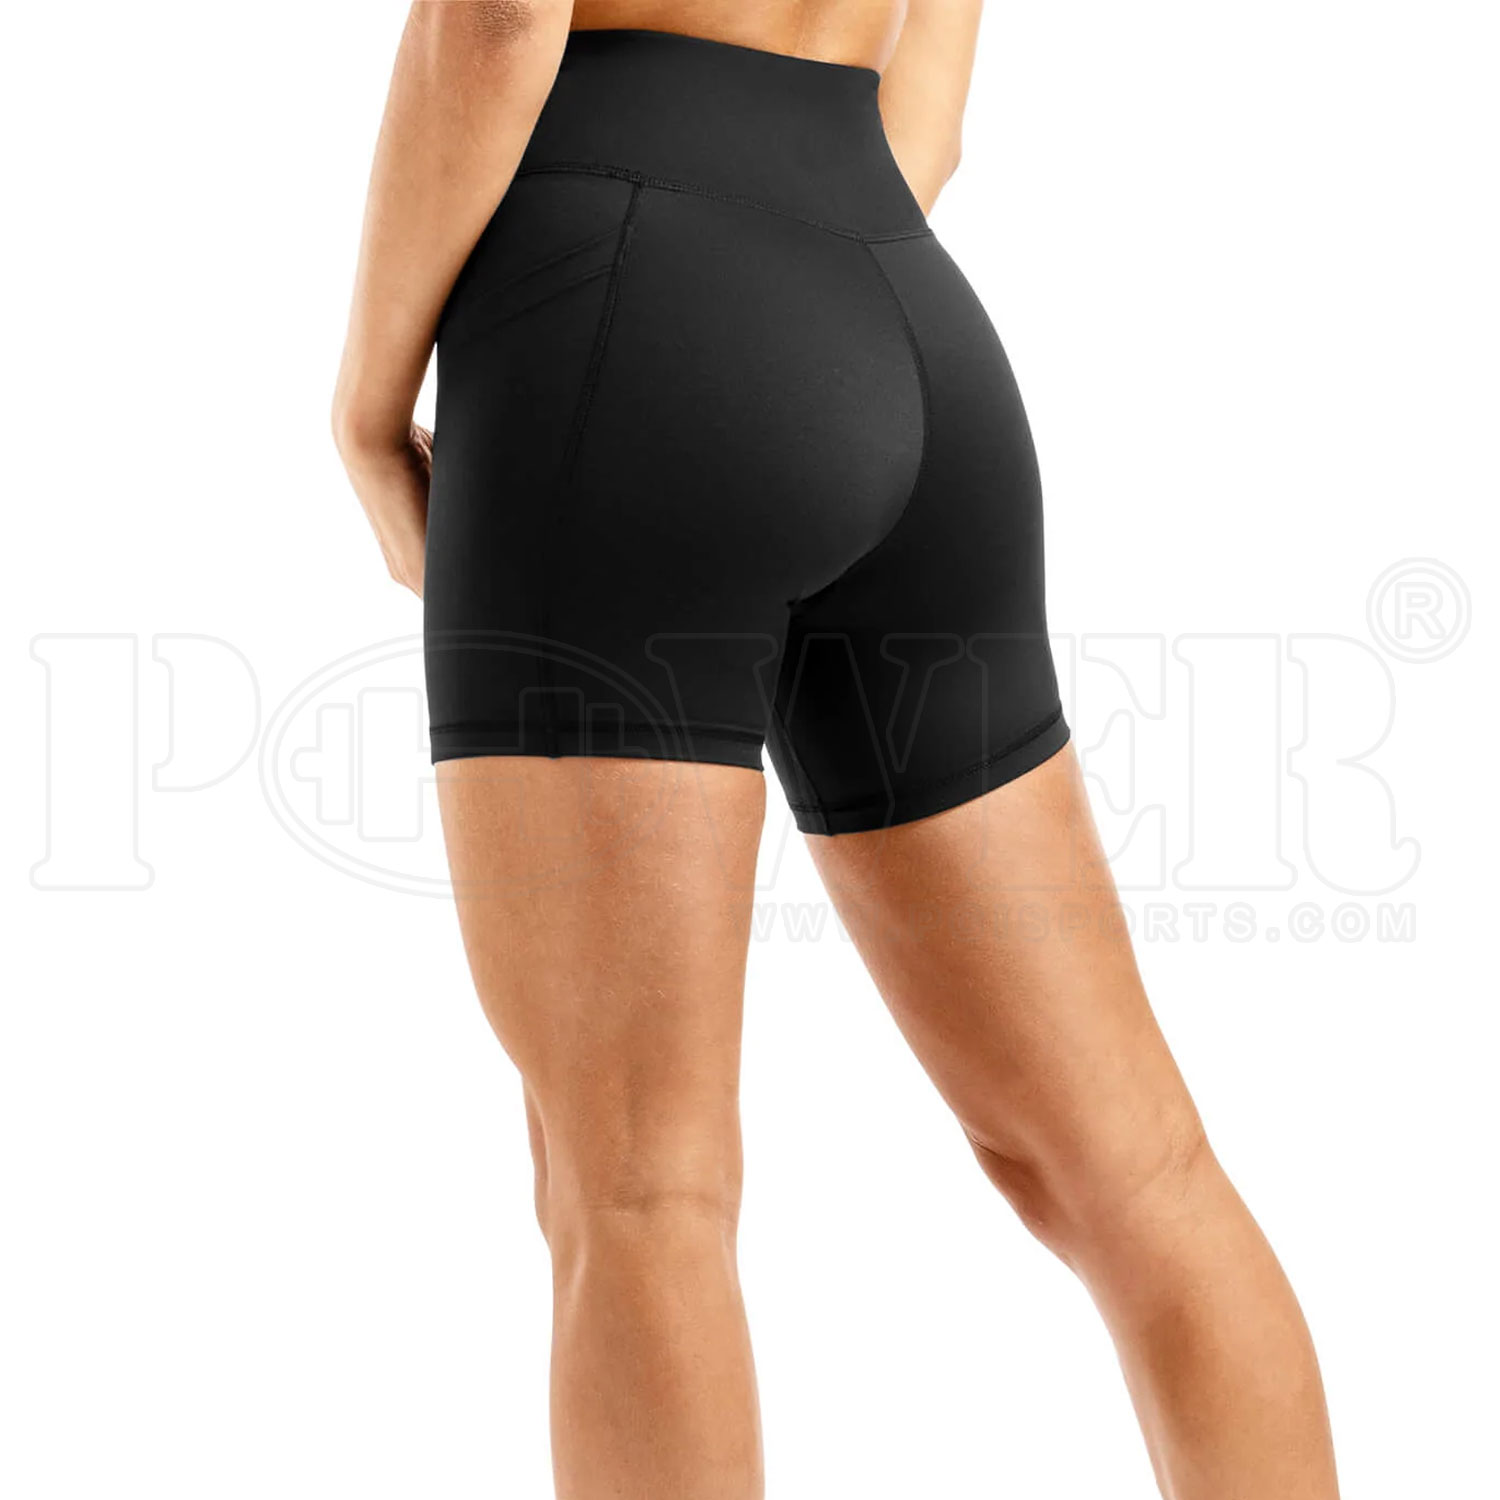 Women's Gym Shorts